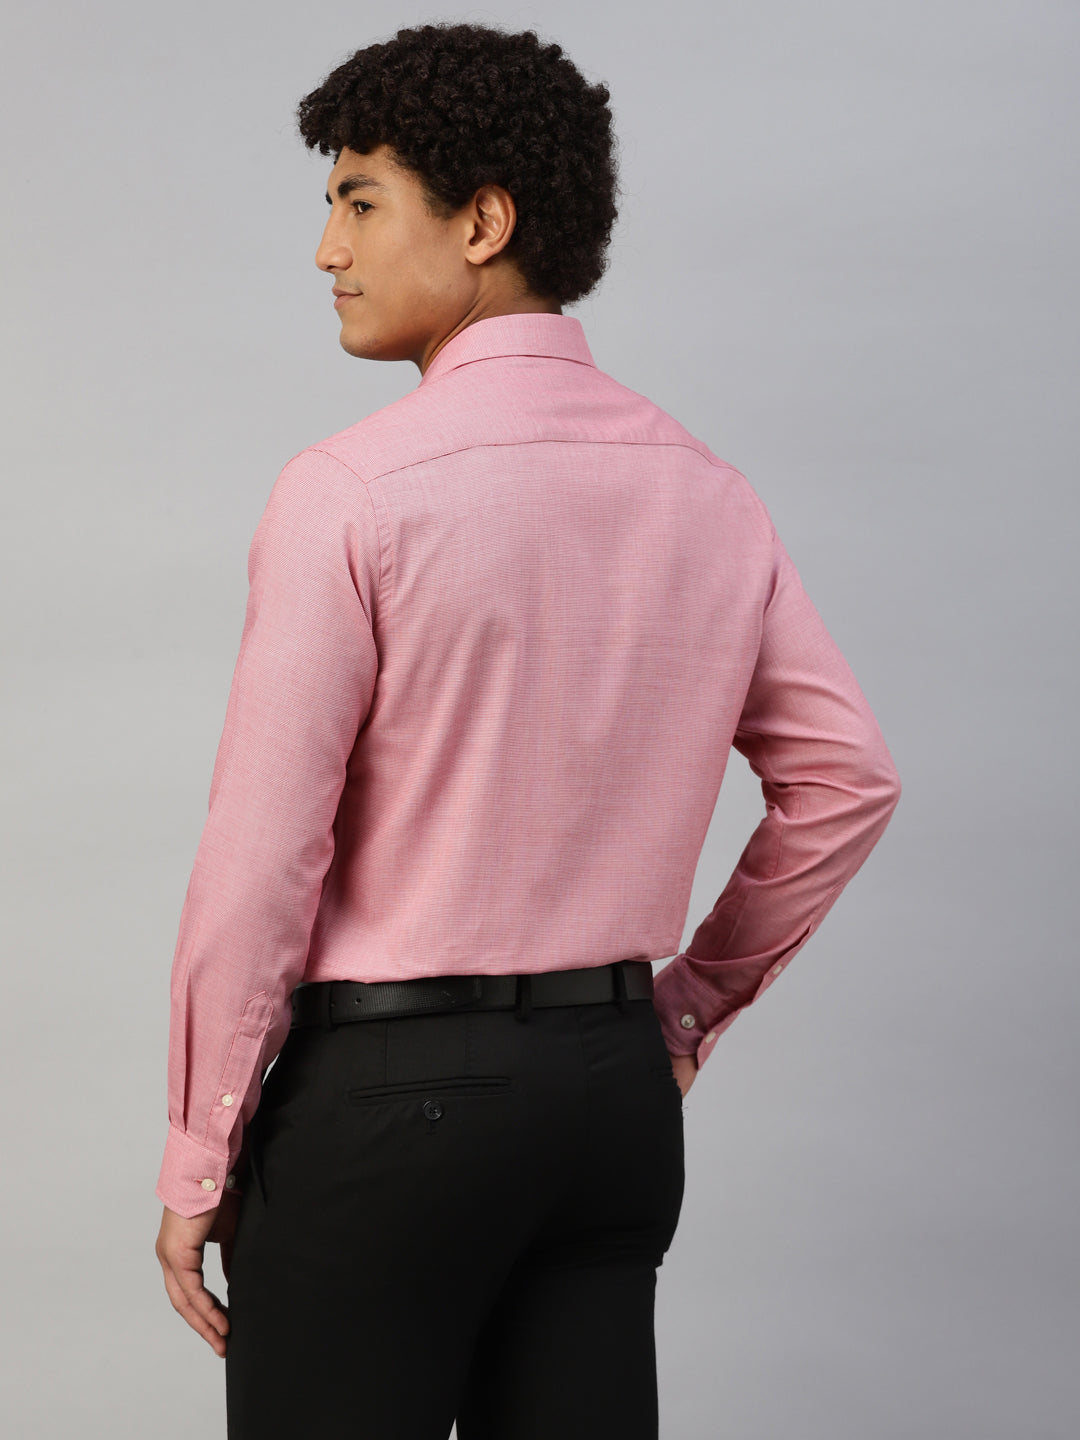 Don Vino Men's Pink Solid Regular Fit Full Sleeves Shirt